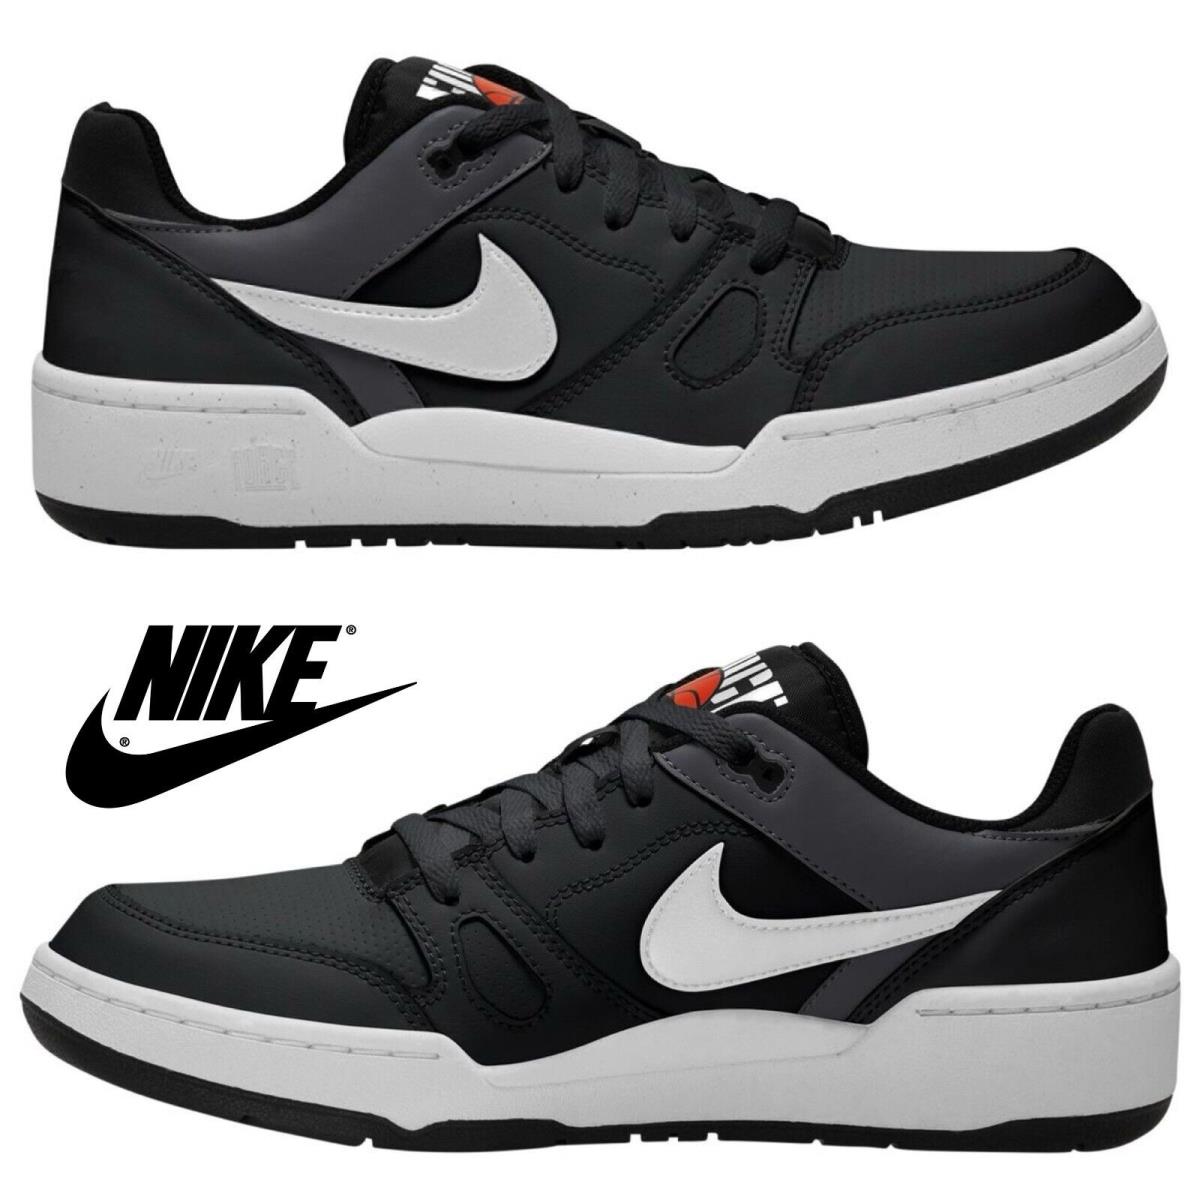 Nike Full Force Low Top Men`s Sneakers Sport Comfort Athletic Shoes Black Gray